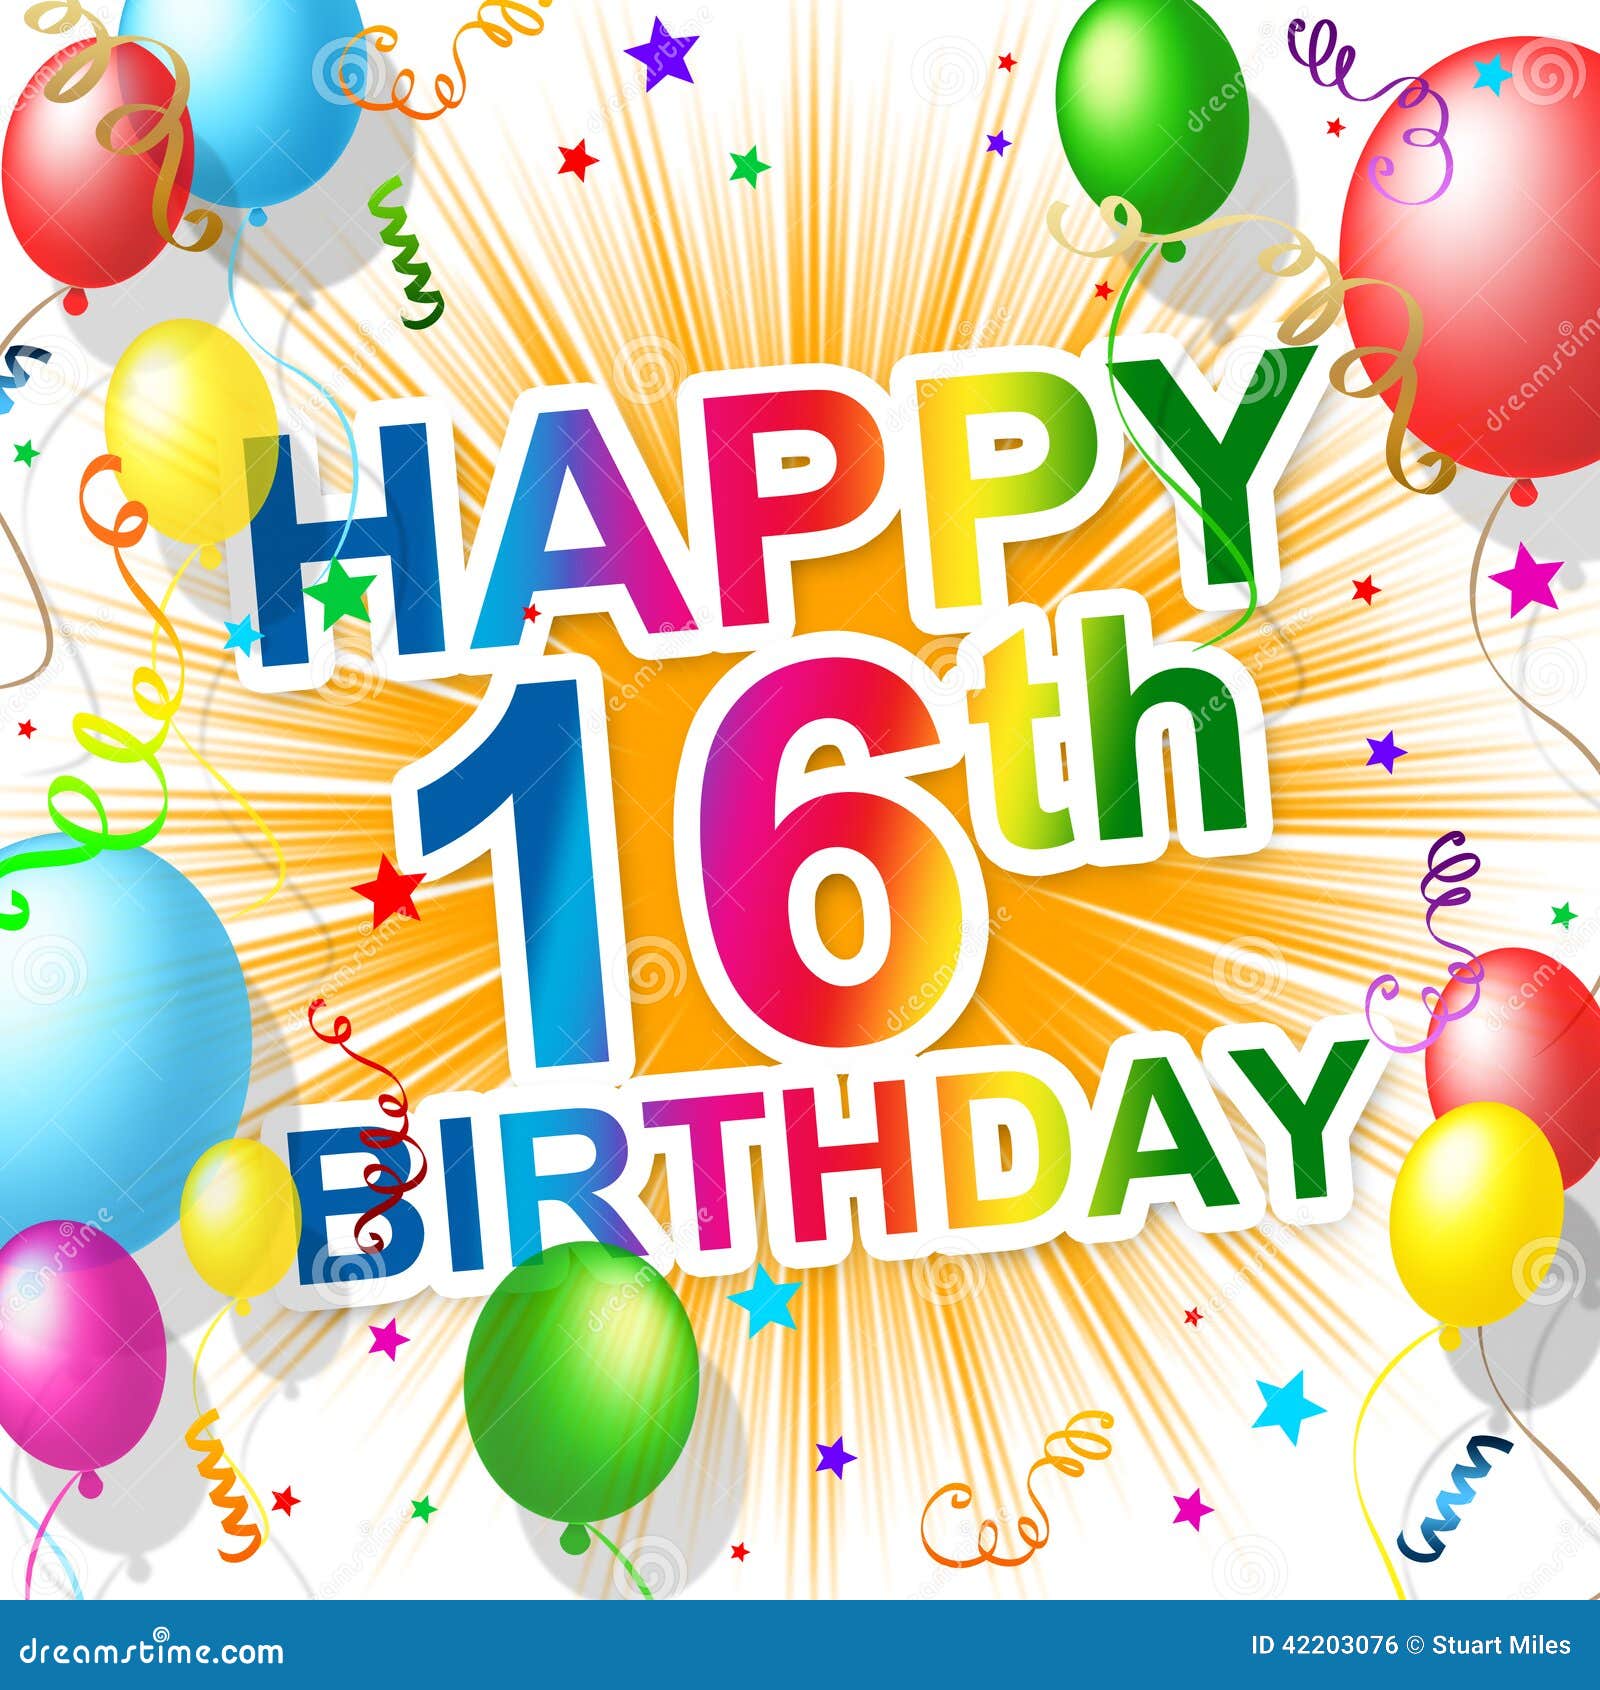 birthday sixteenth represents celebration greeting and congratulations